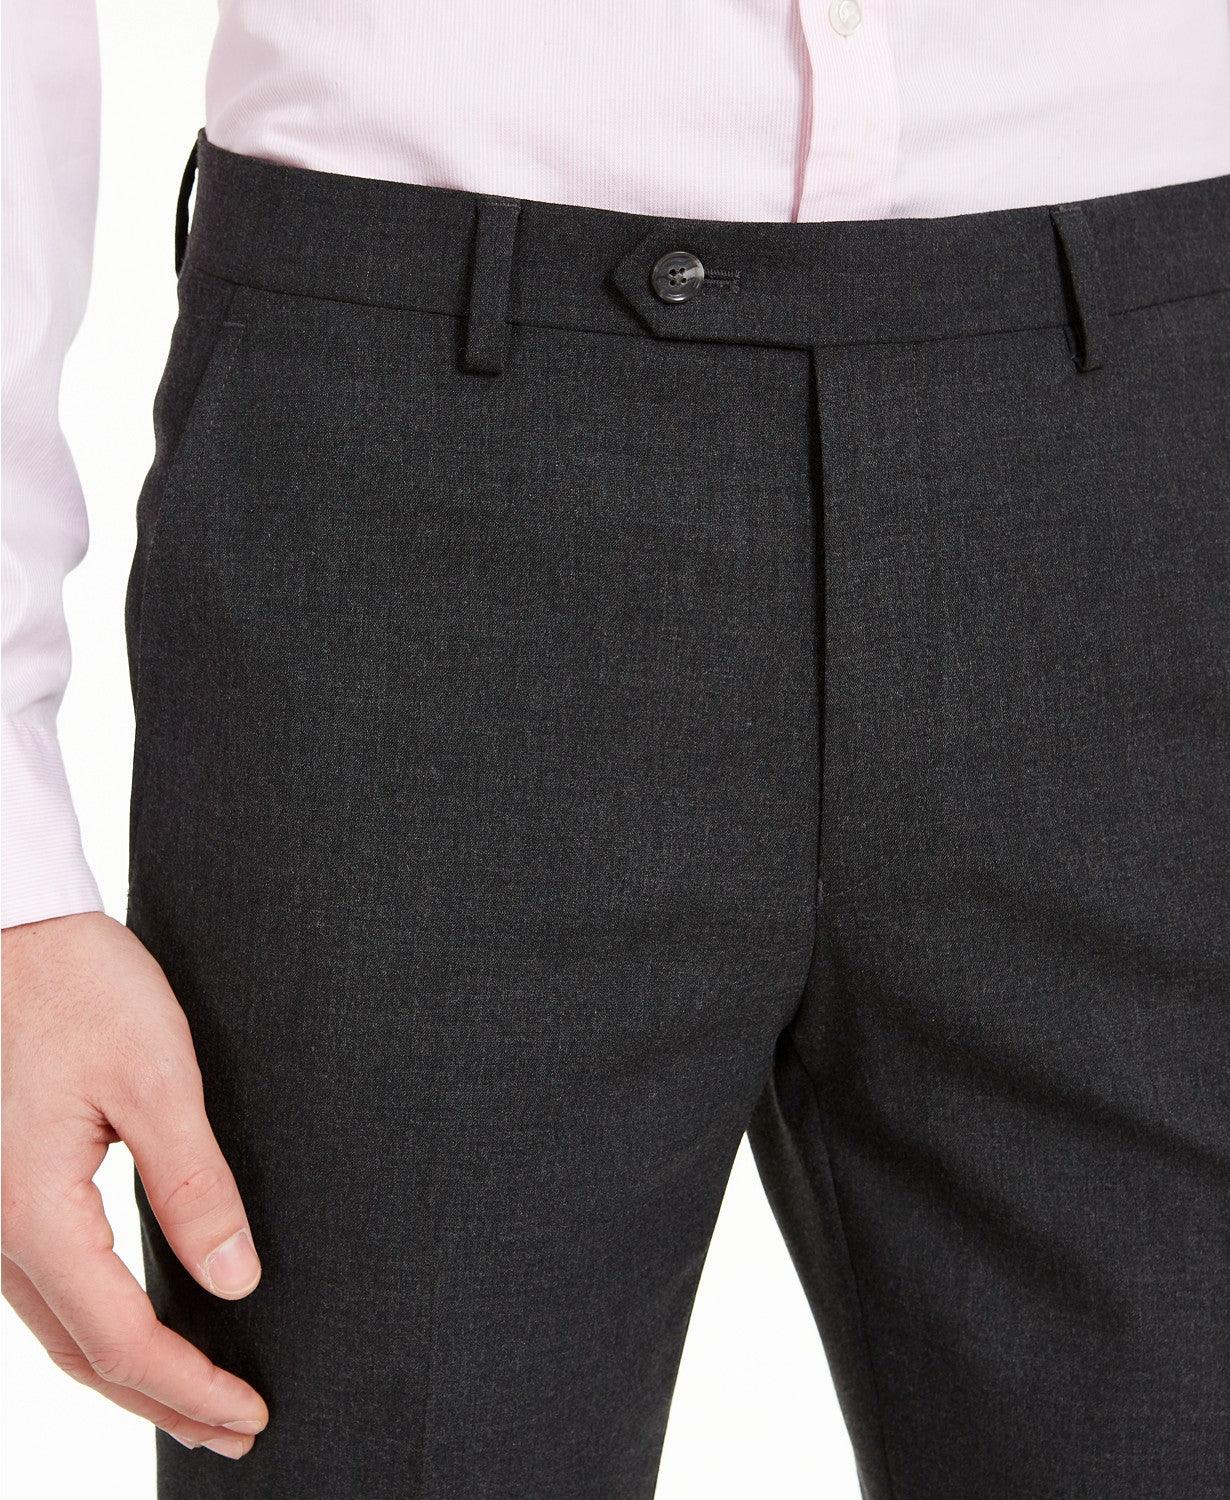 Alfani Men's Slim-Fit Stretch Solid Dress Pants 38 x 30 Charcoal Grey - Bristol Apparel Co